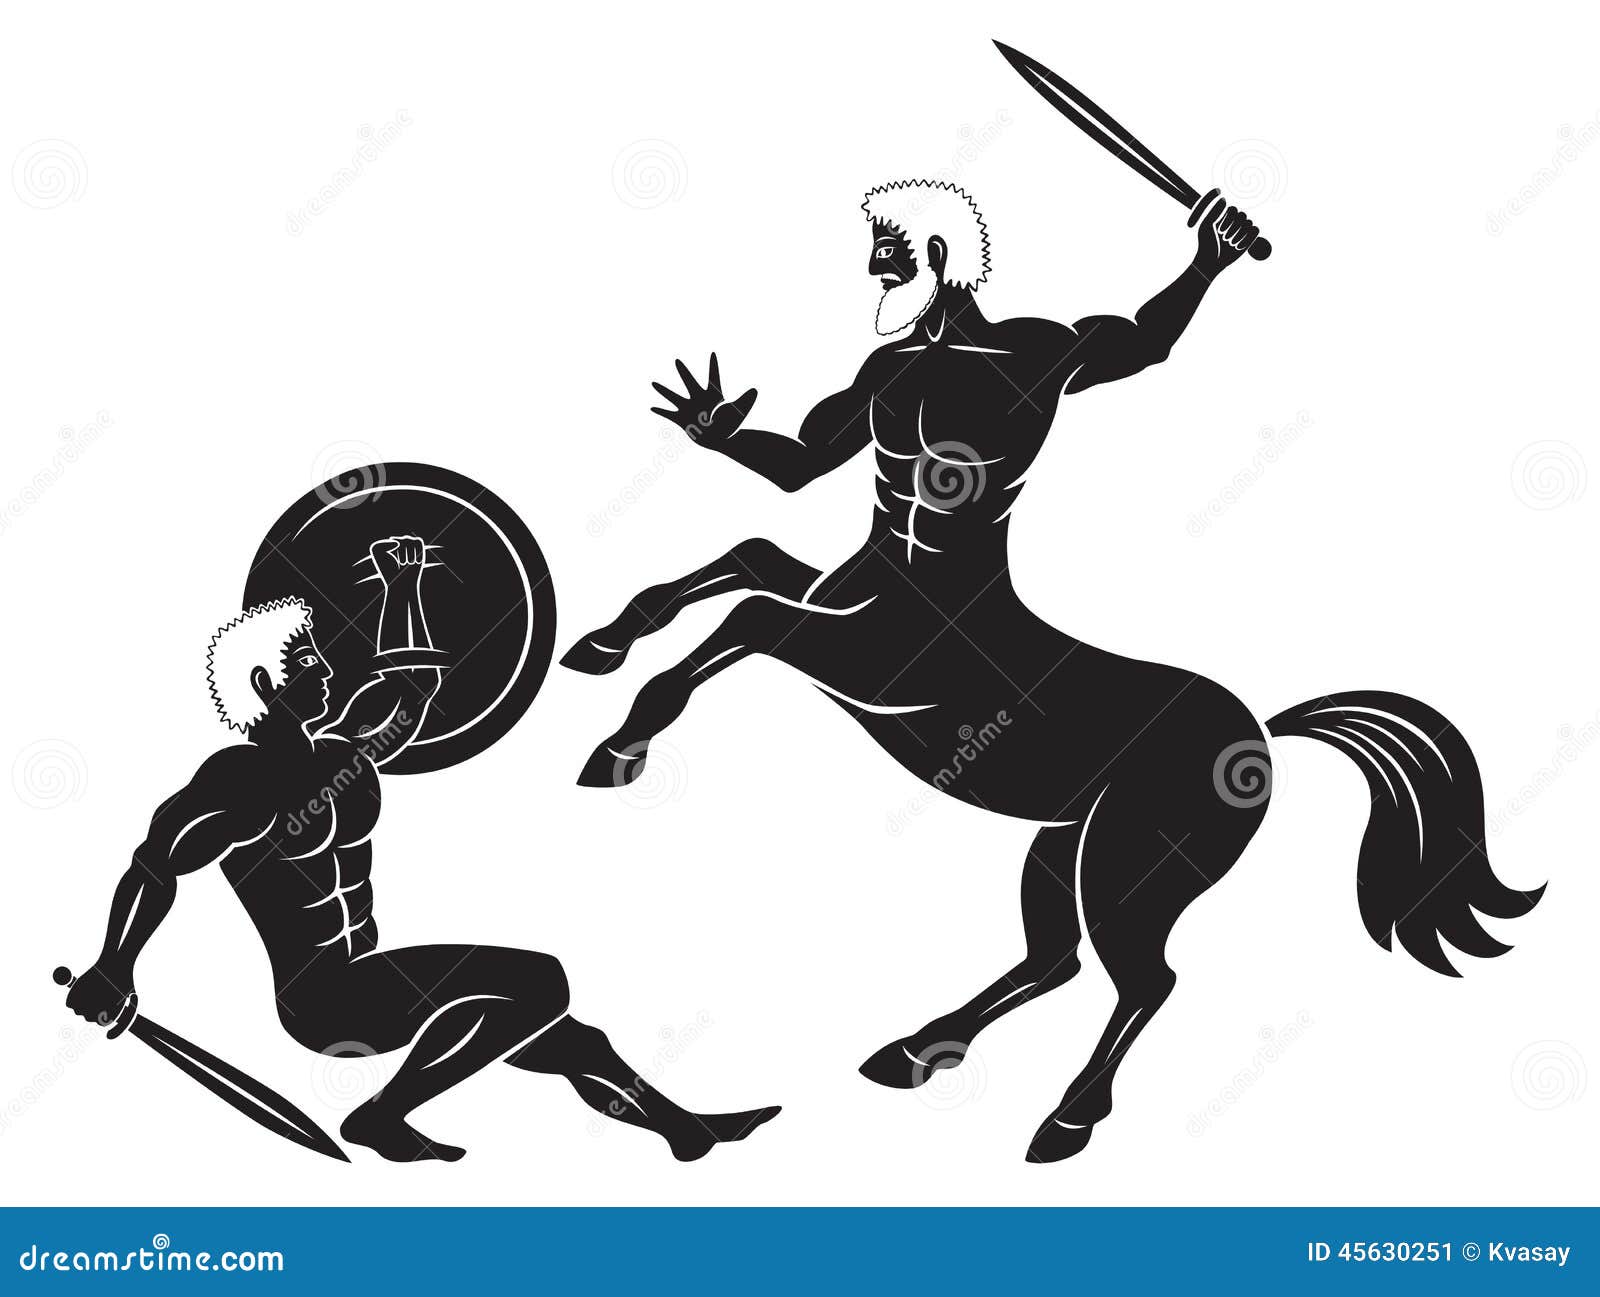 centaur and hercules